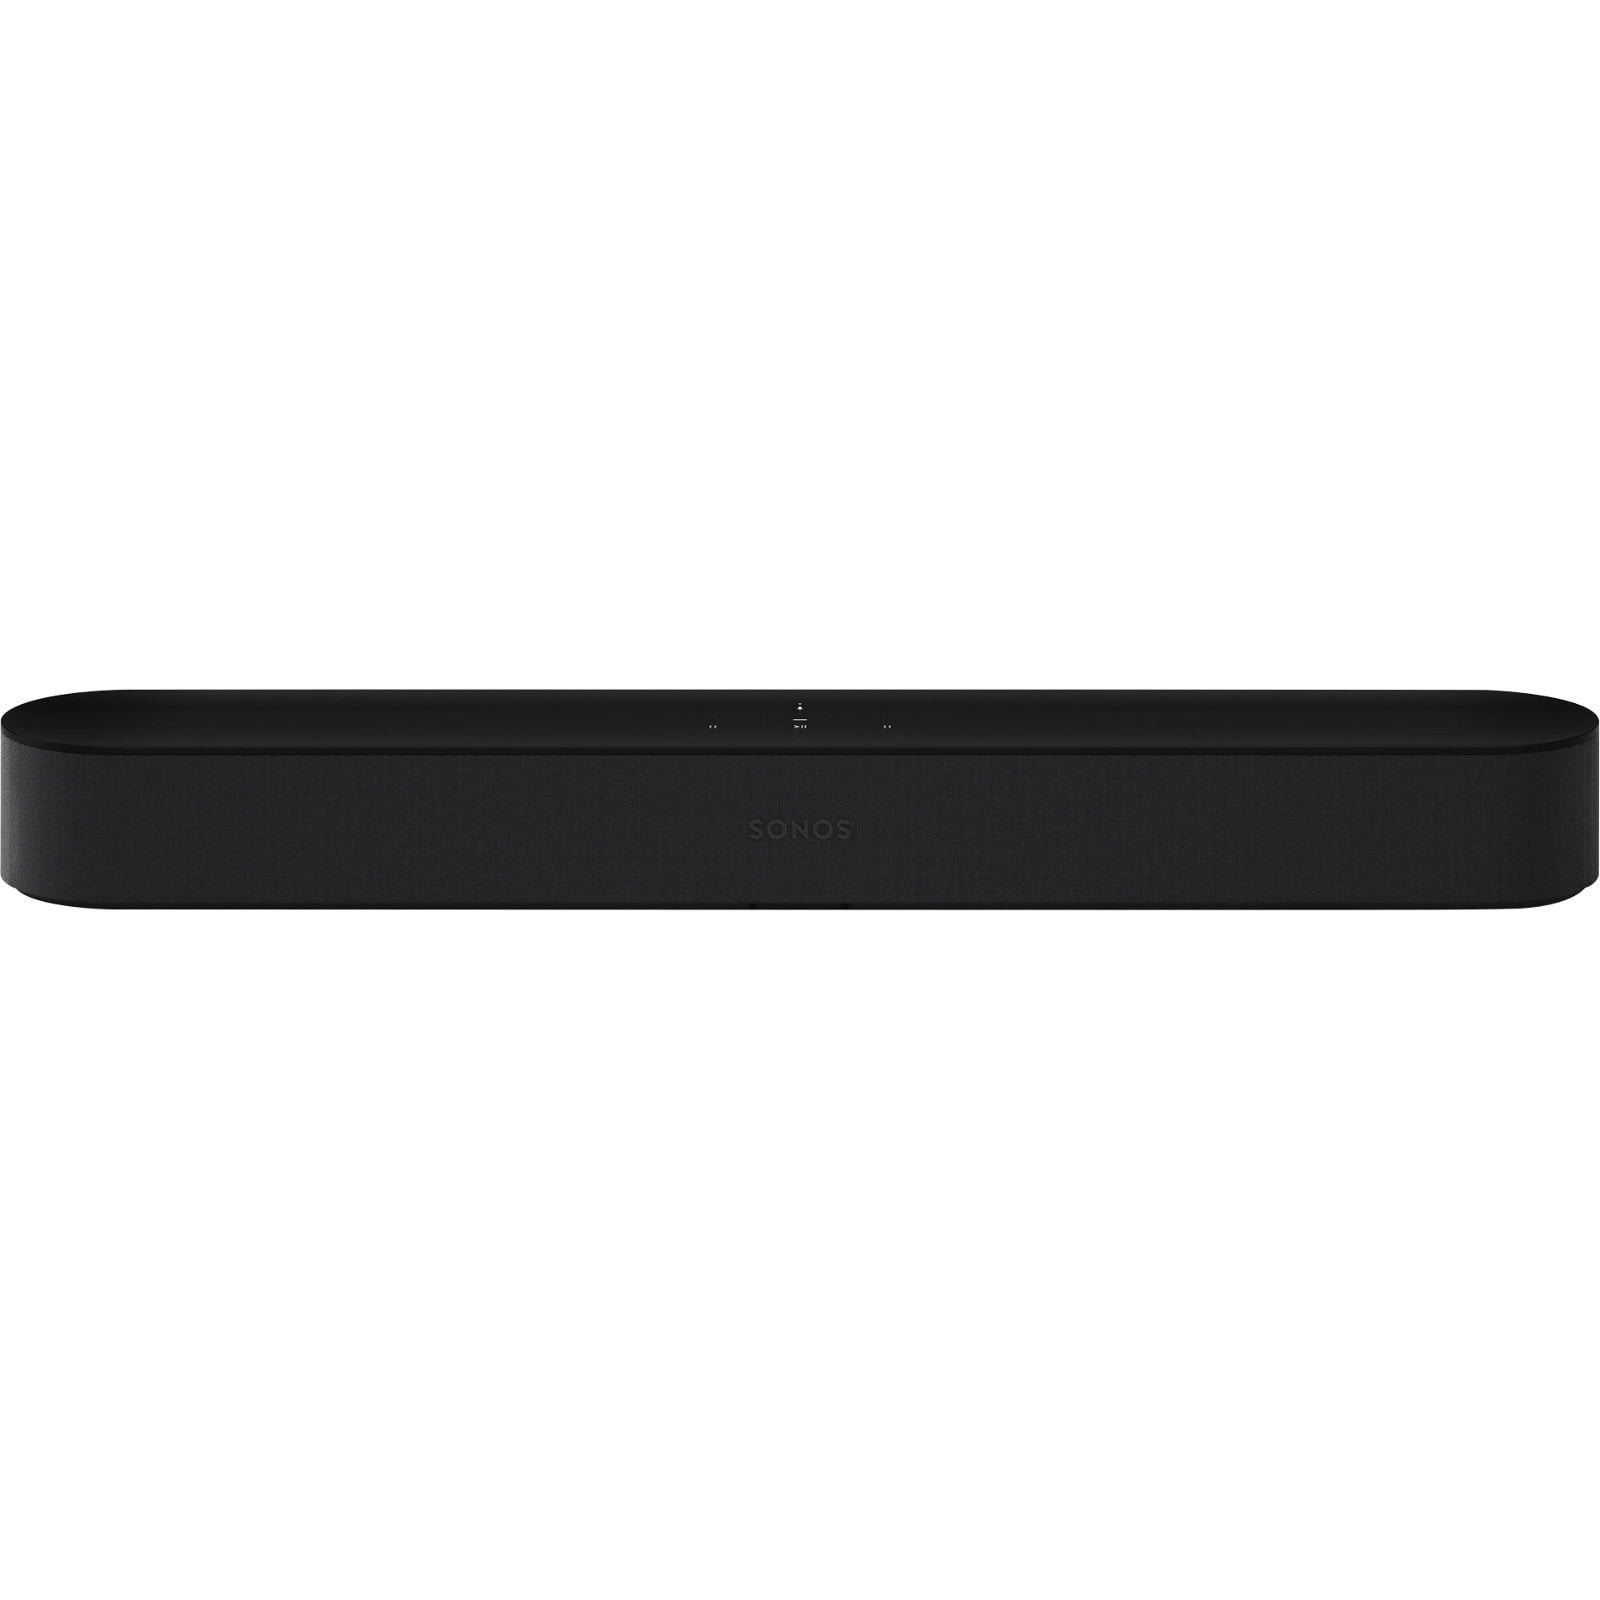 Sonos Black Smart Compact Soundbar - Walmart.com